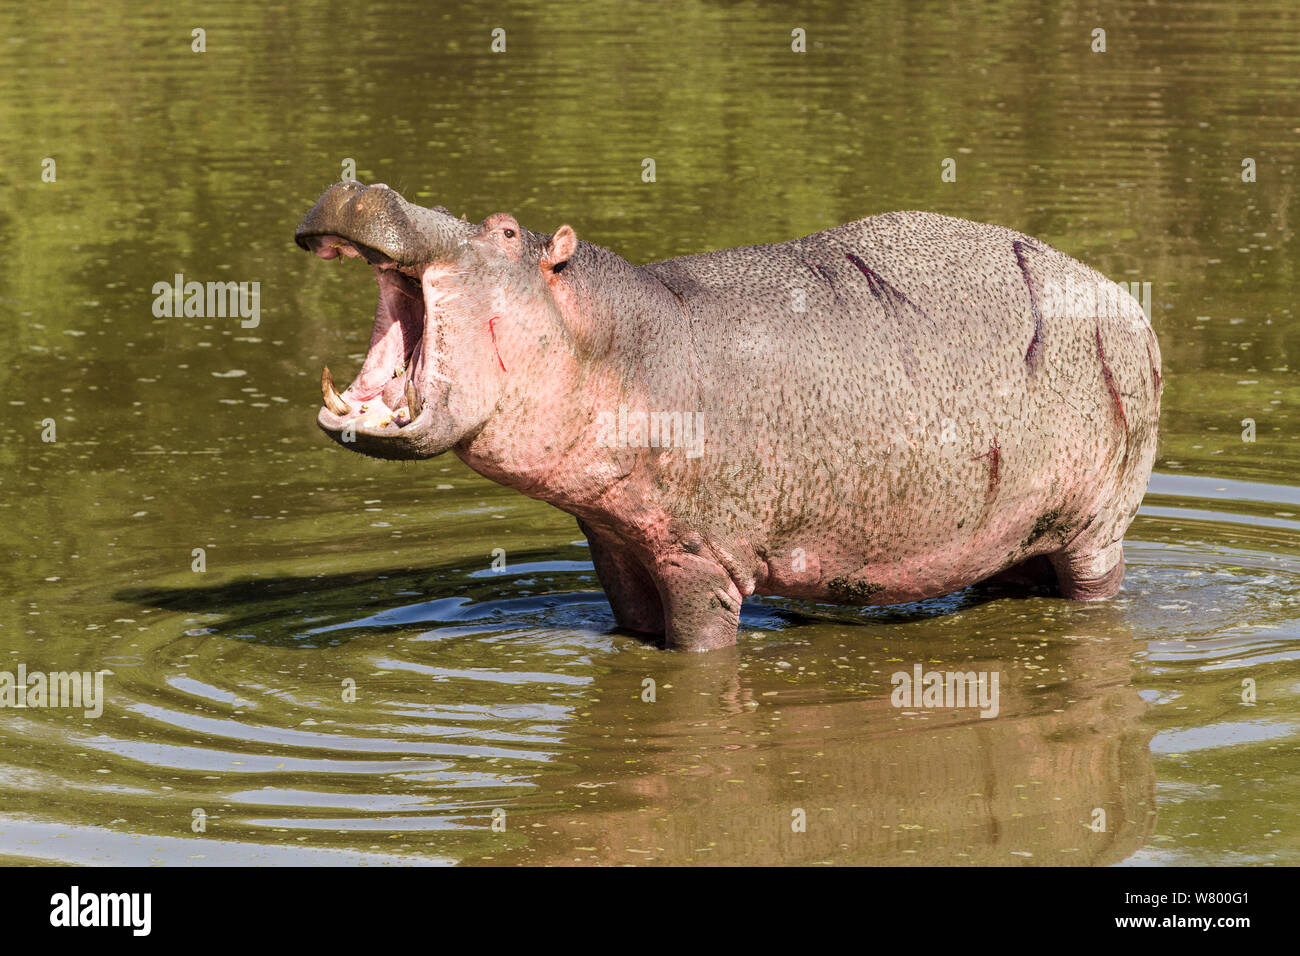 Hipopótamo (Hippopotamus amphibius) macho agresivo con cicatrices, Masai-Mara Game Reserve, Kenya. Foto de stock